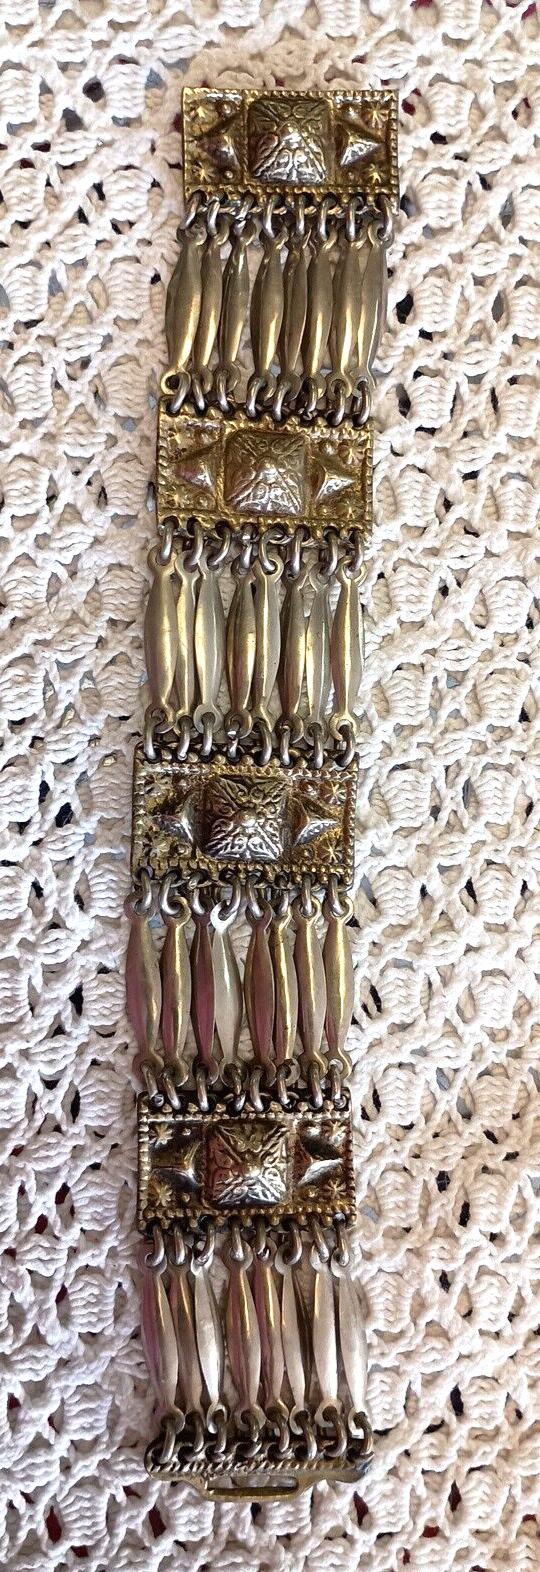 Vintage Taxco Mexico sterling silver wide southwestern Aztec bracelet Stunning